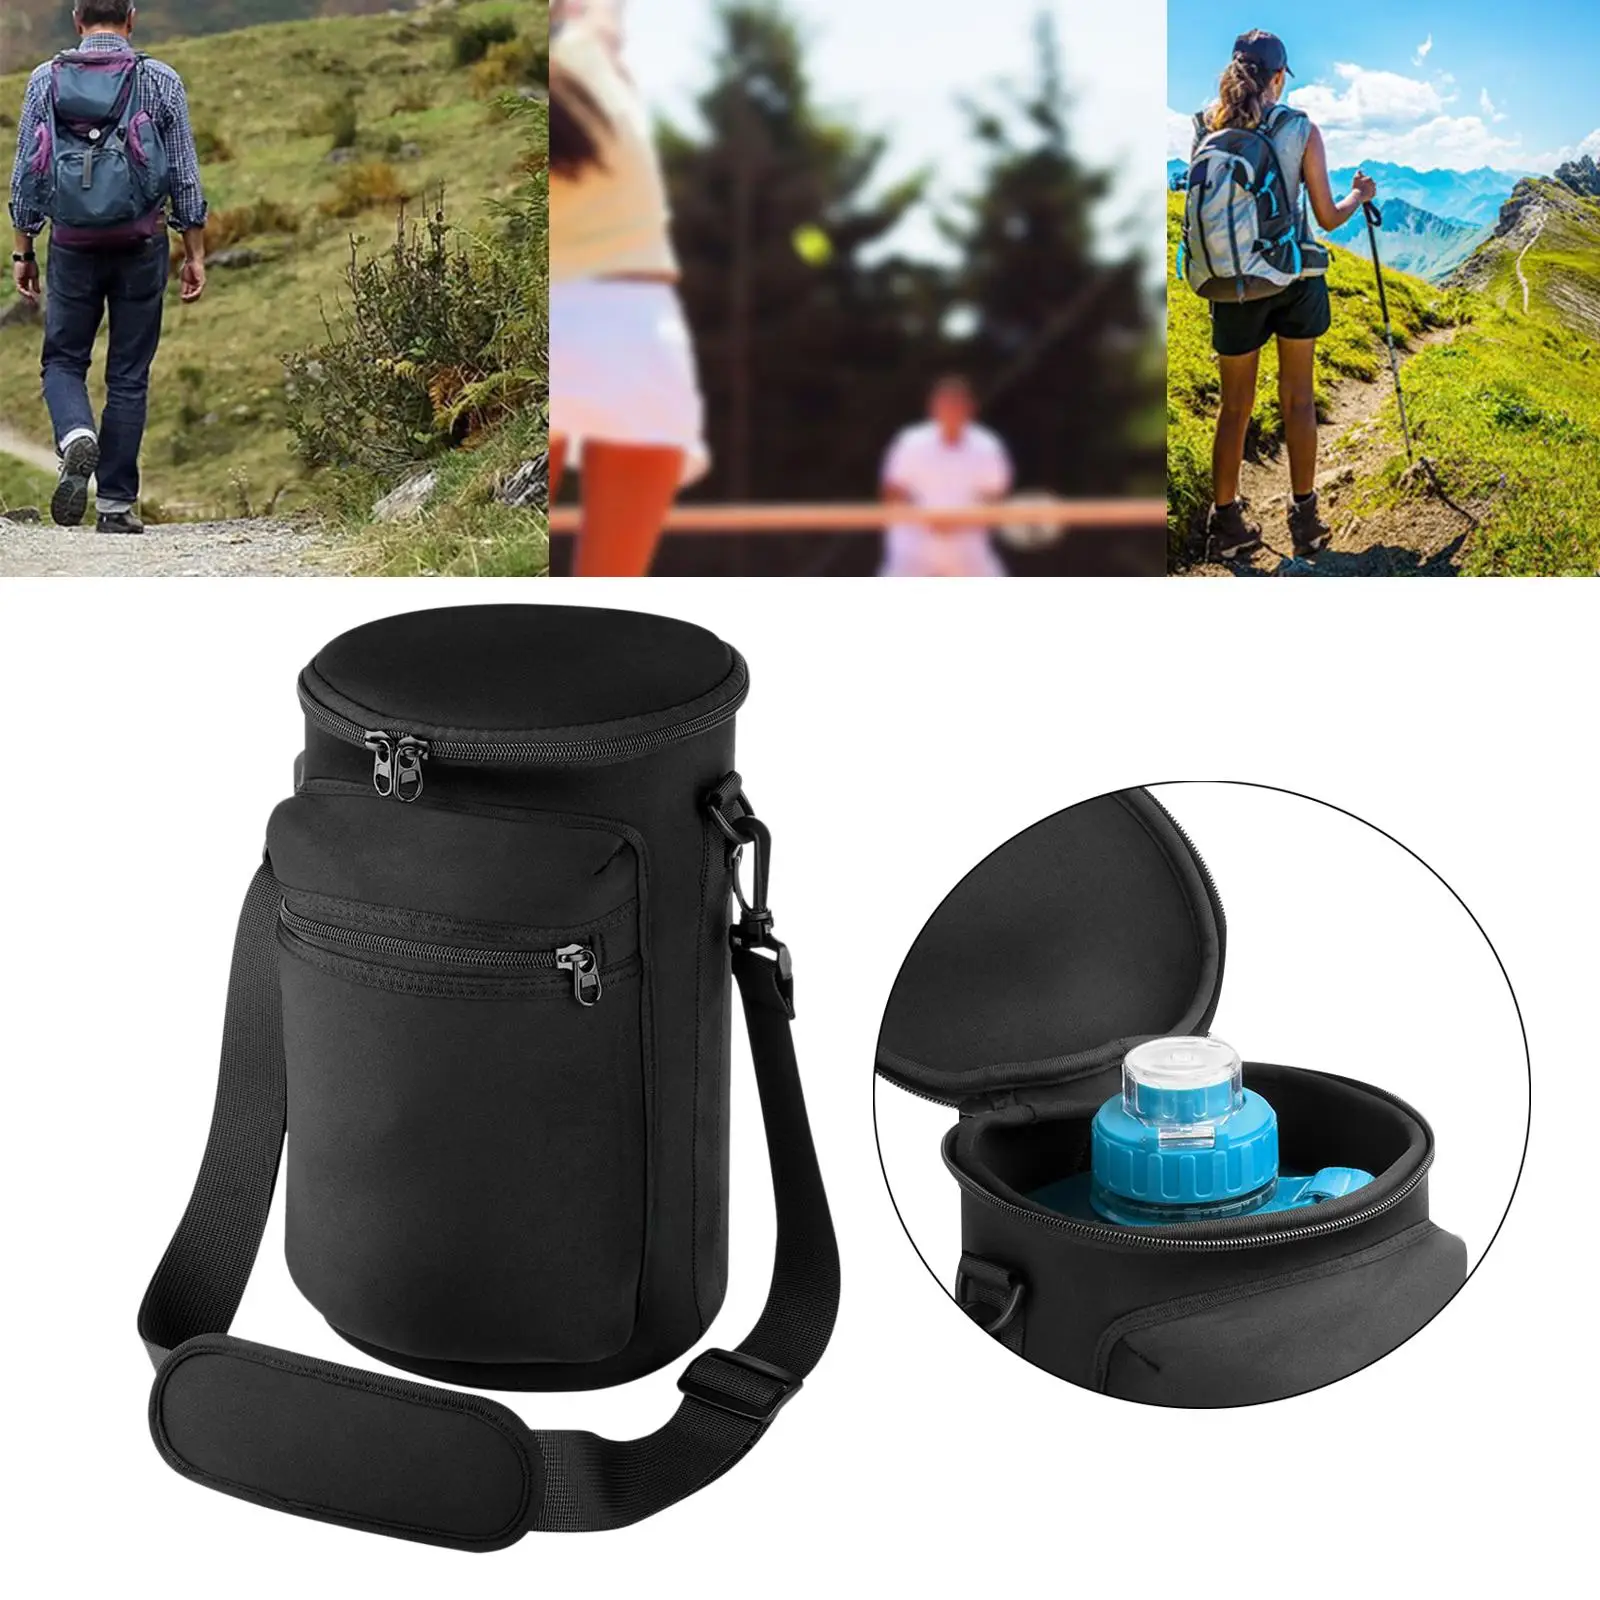 Water Bottle Holder Carrying Bag Water Bottle Carrier Bag for Travel Walking